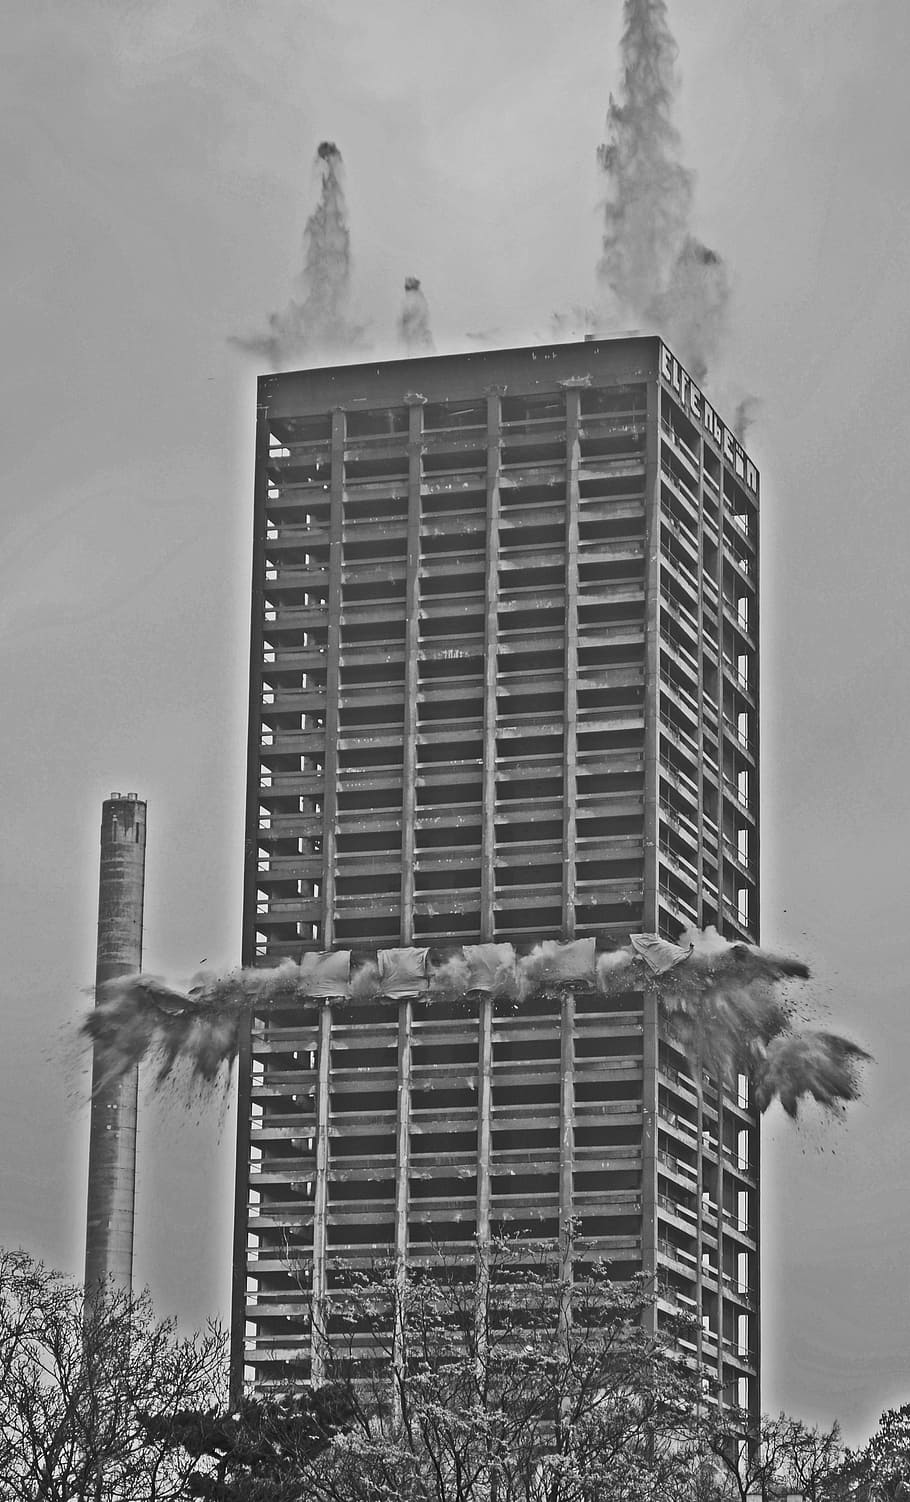 blowing up, afe tower, frankfurt, demolition, explosion, collapse, HD wallpaper